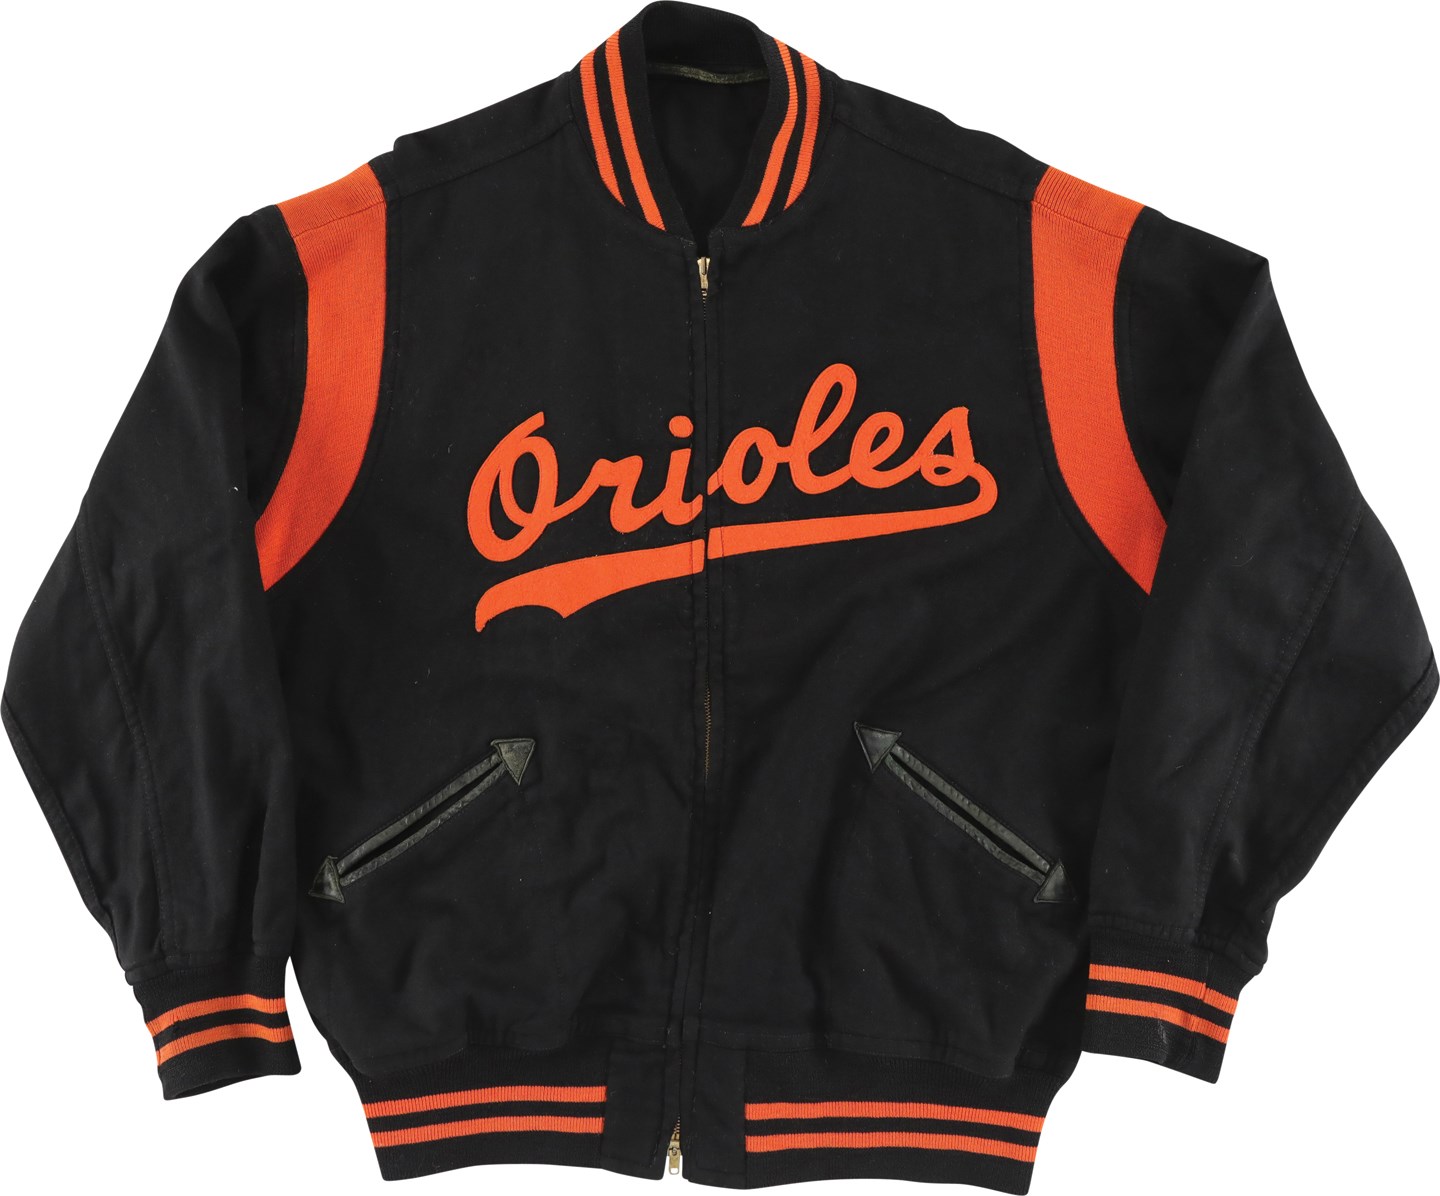 Baseball Equipment - Circa 1966 Eddie Fisher Baltimore Orioles Jacket